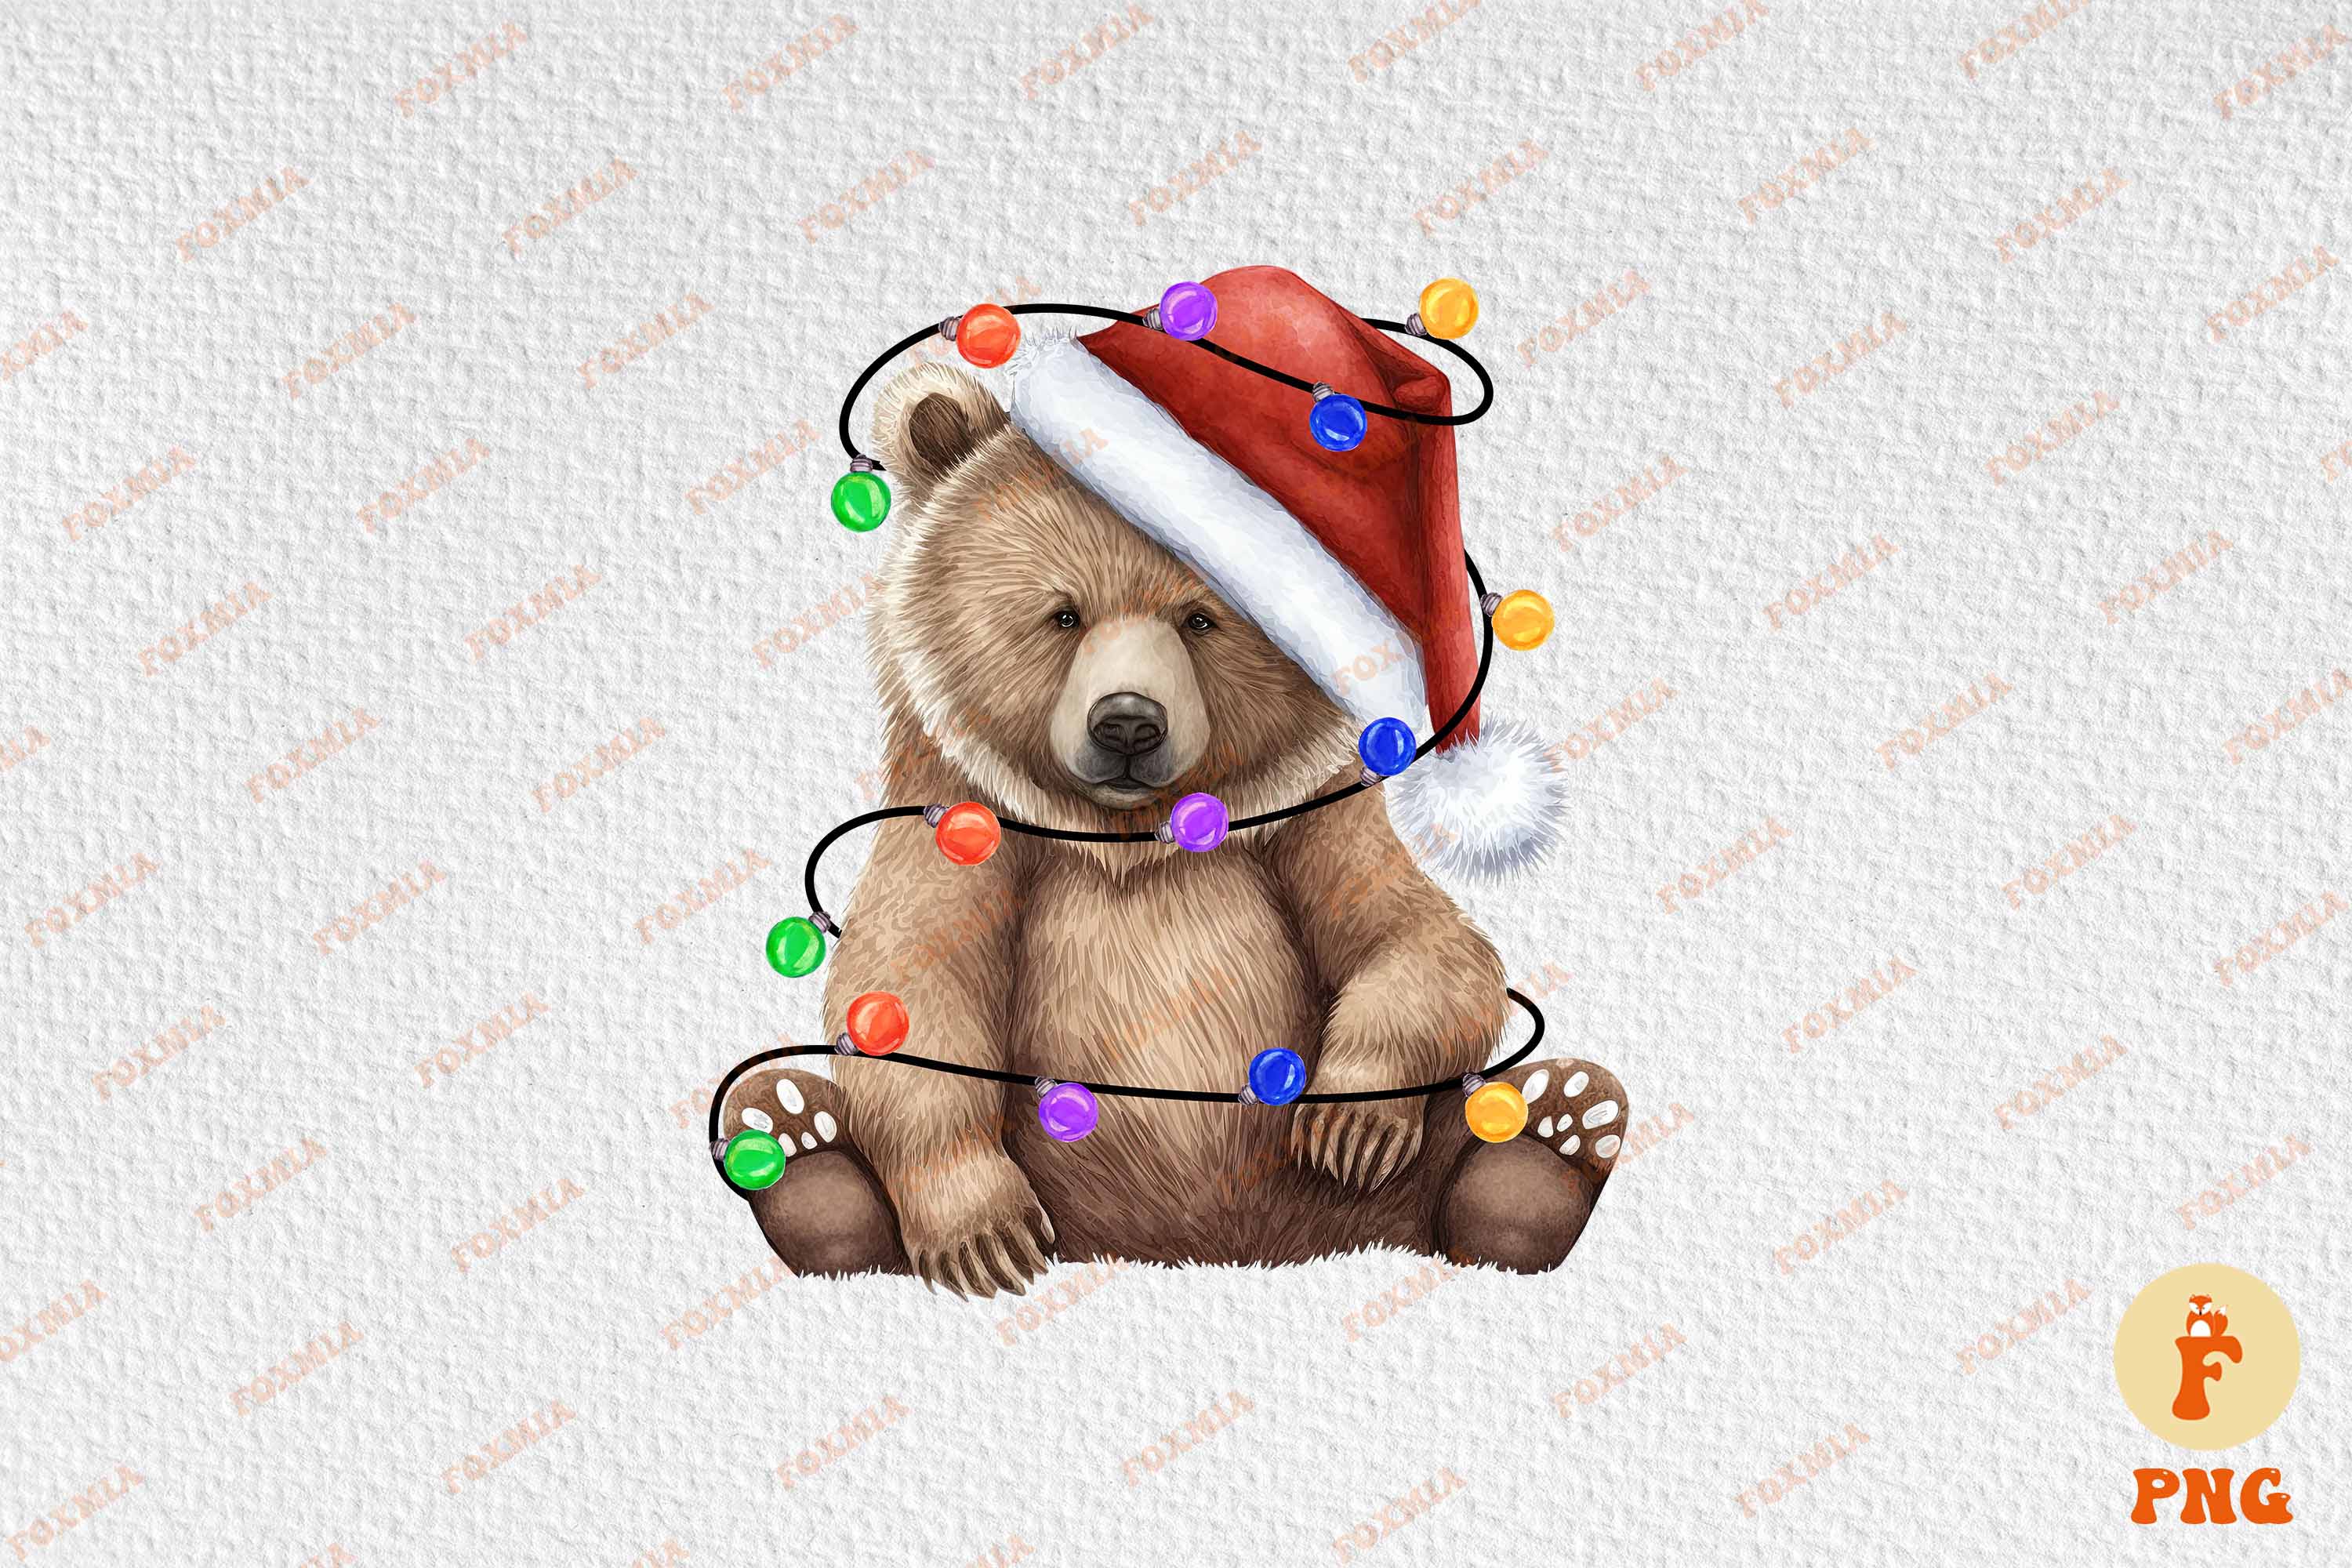 Amazing image of a bear wearing a santa hat.